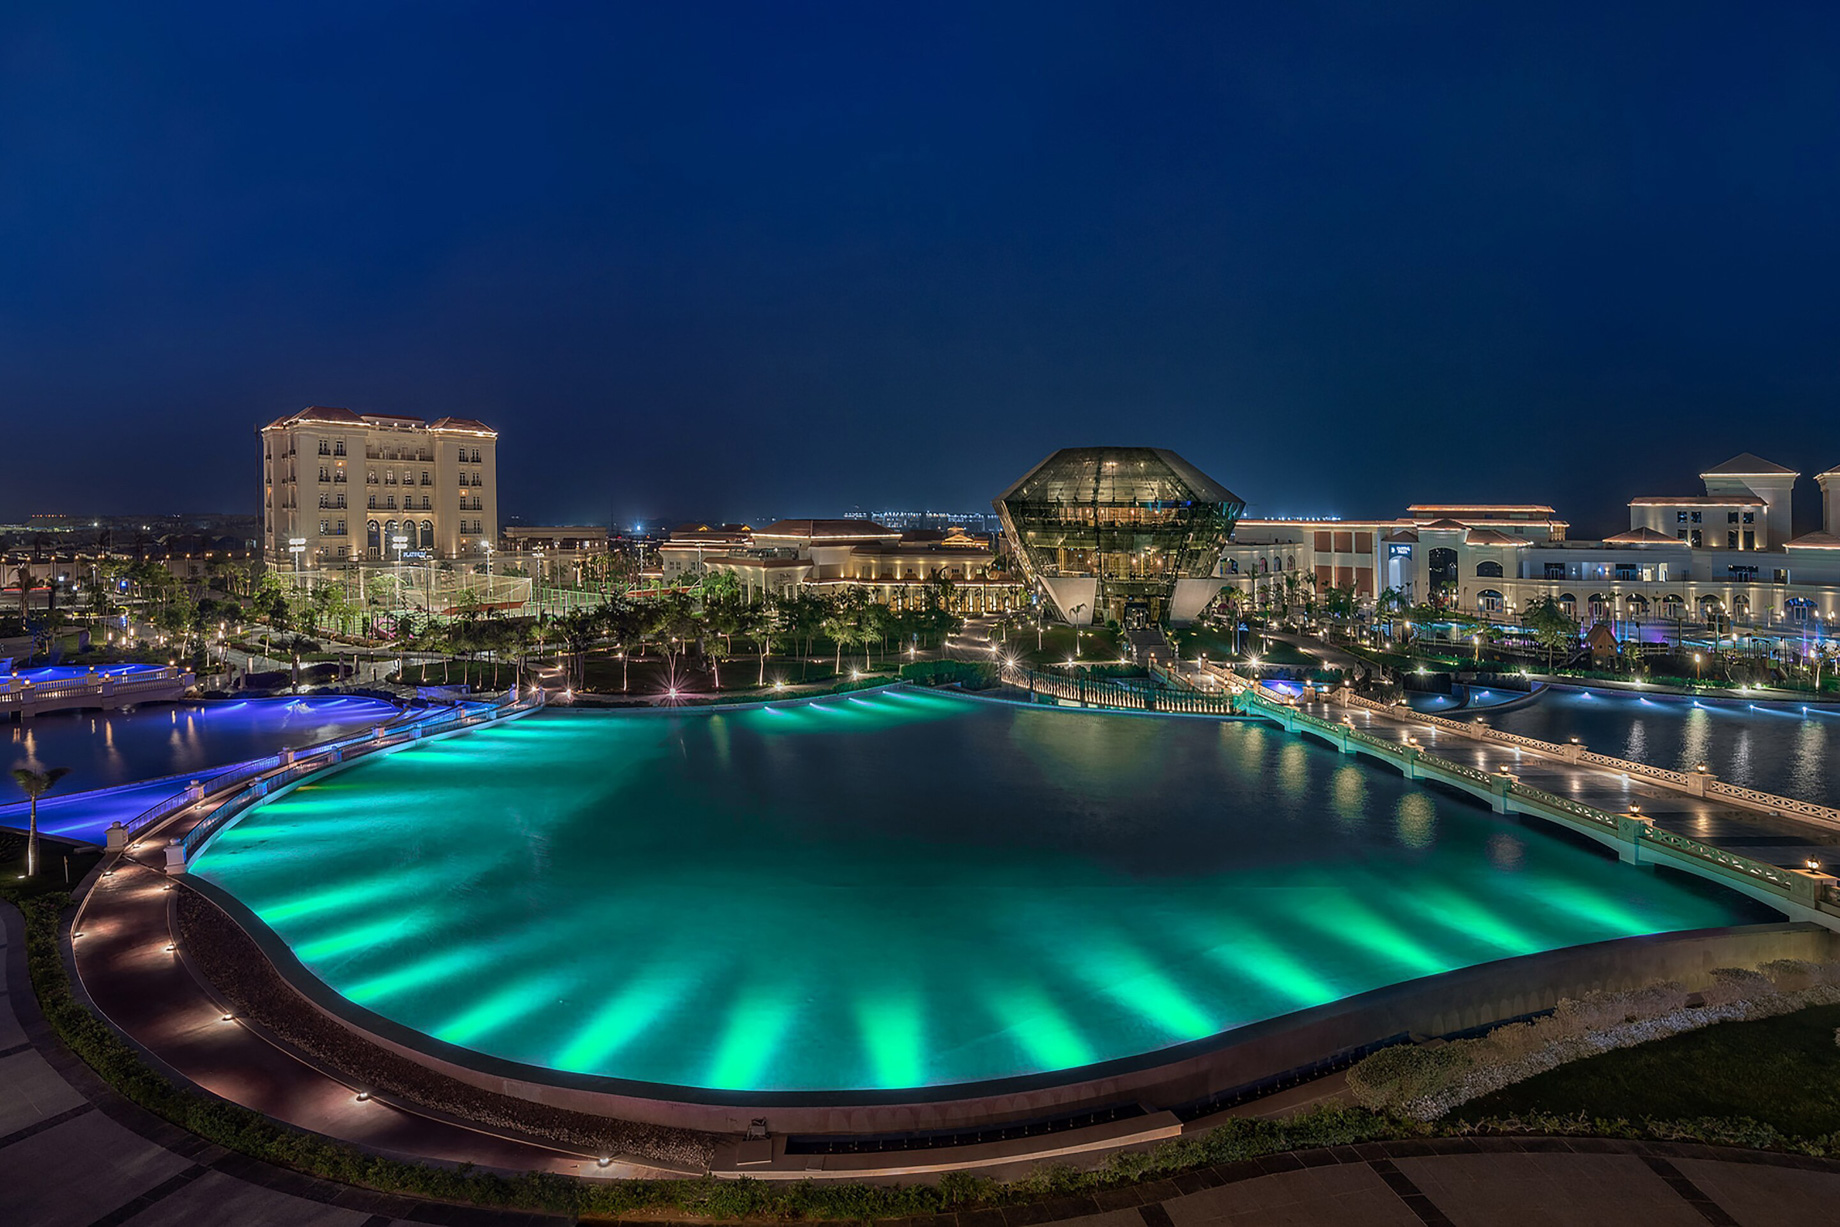 The St. Regis Almasa Hotel – Cairo, Egypt – Hotel Night Exterior Pool View